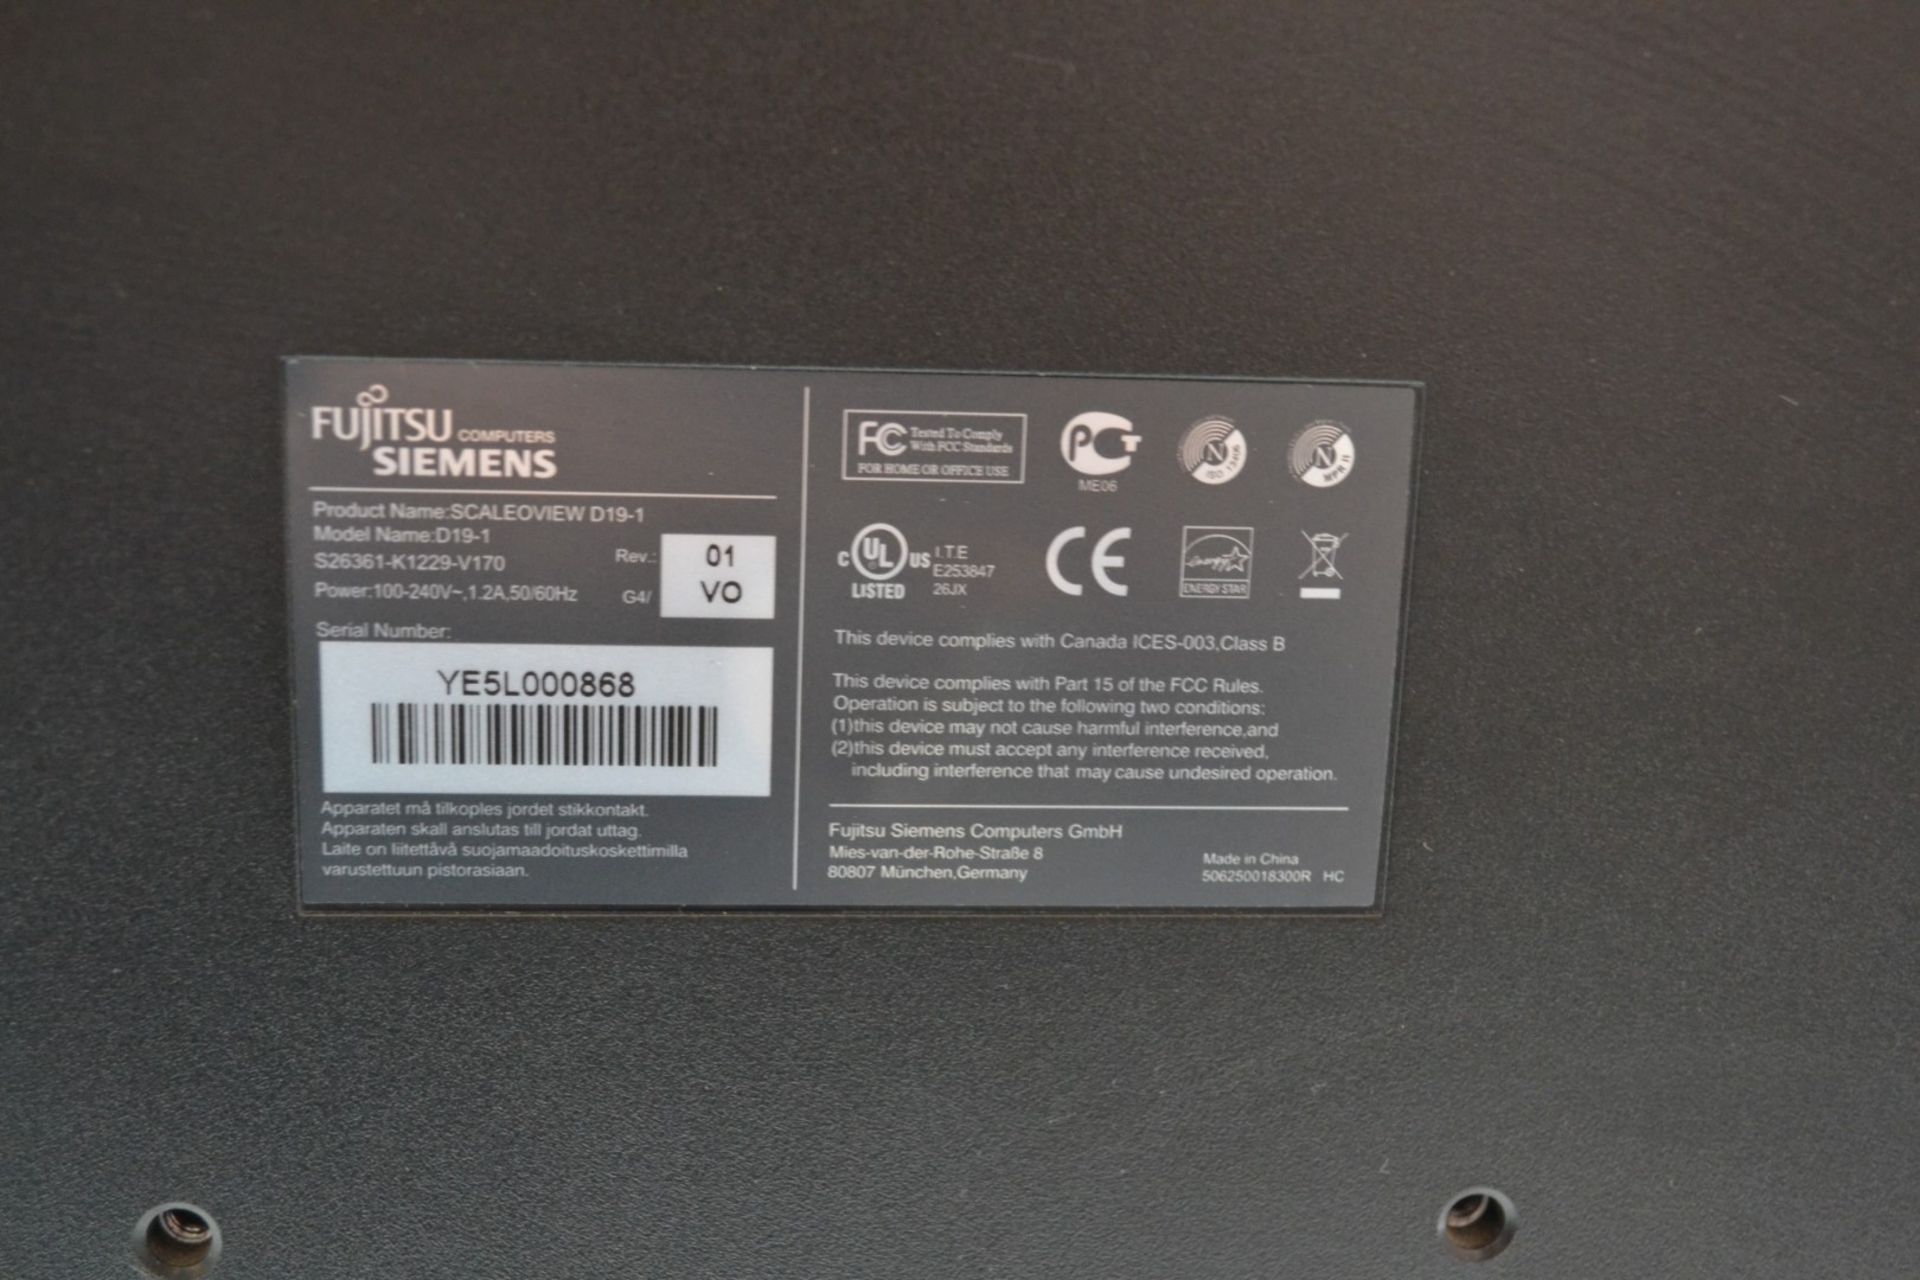 1 x Fujitsu ScaleoView D19-1 19 inch PC Monitor TFT LCD - Ref J2263 - Image 3 of 3